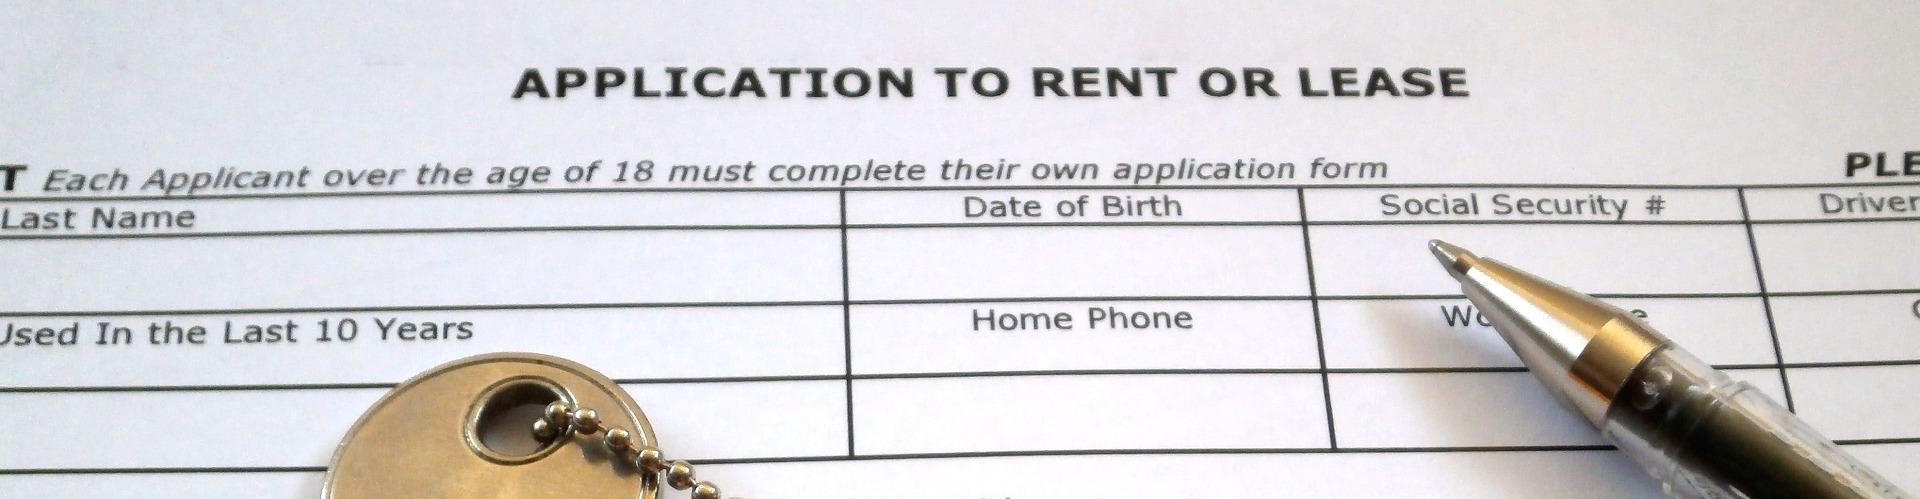 Rental Housing Assistance